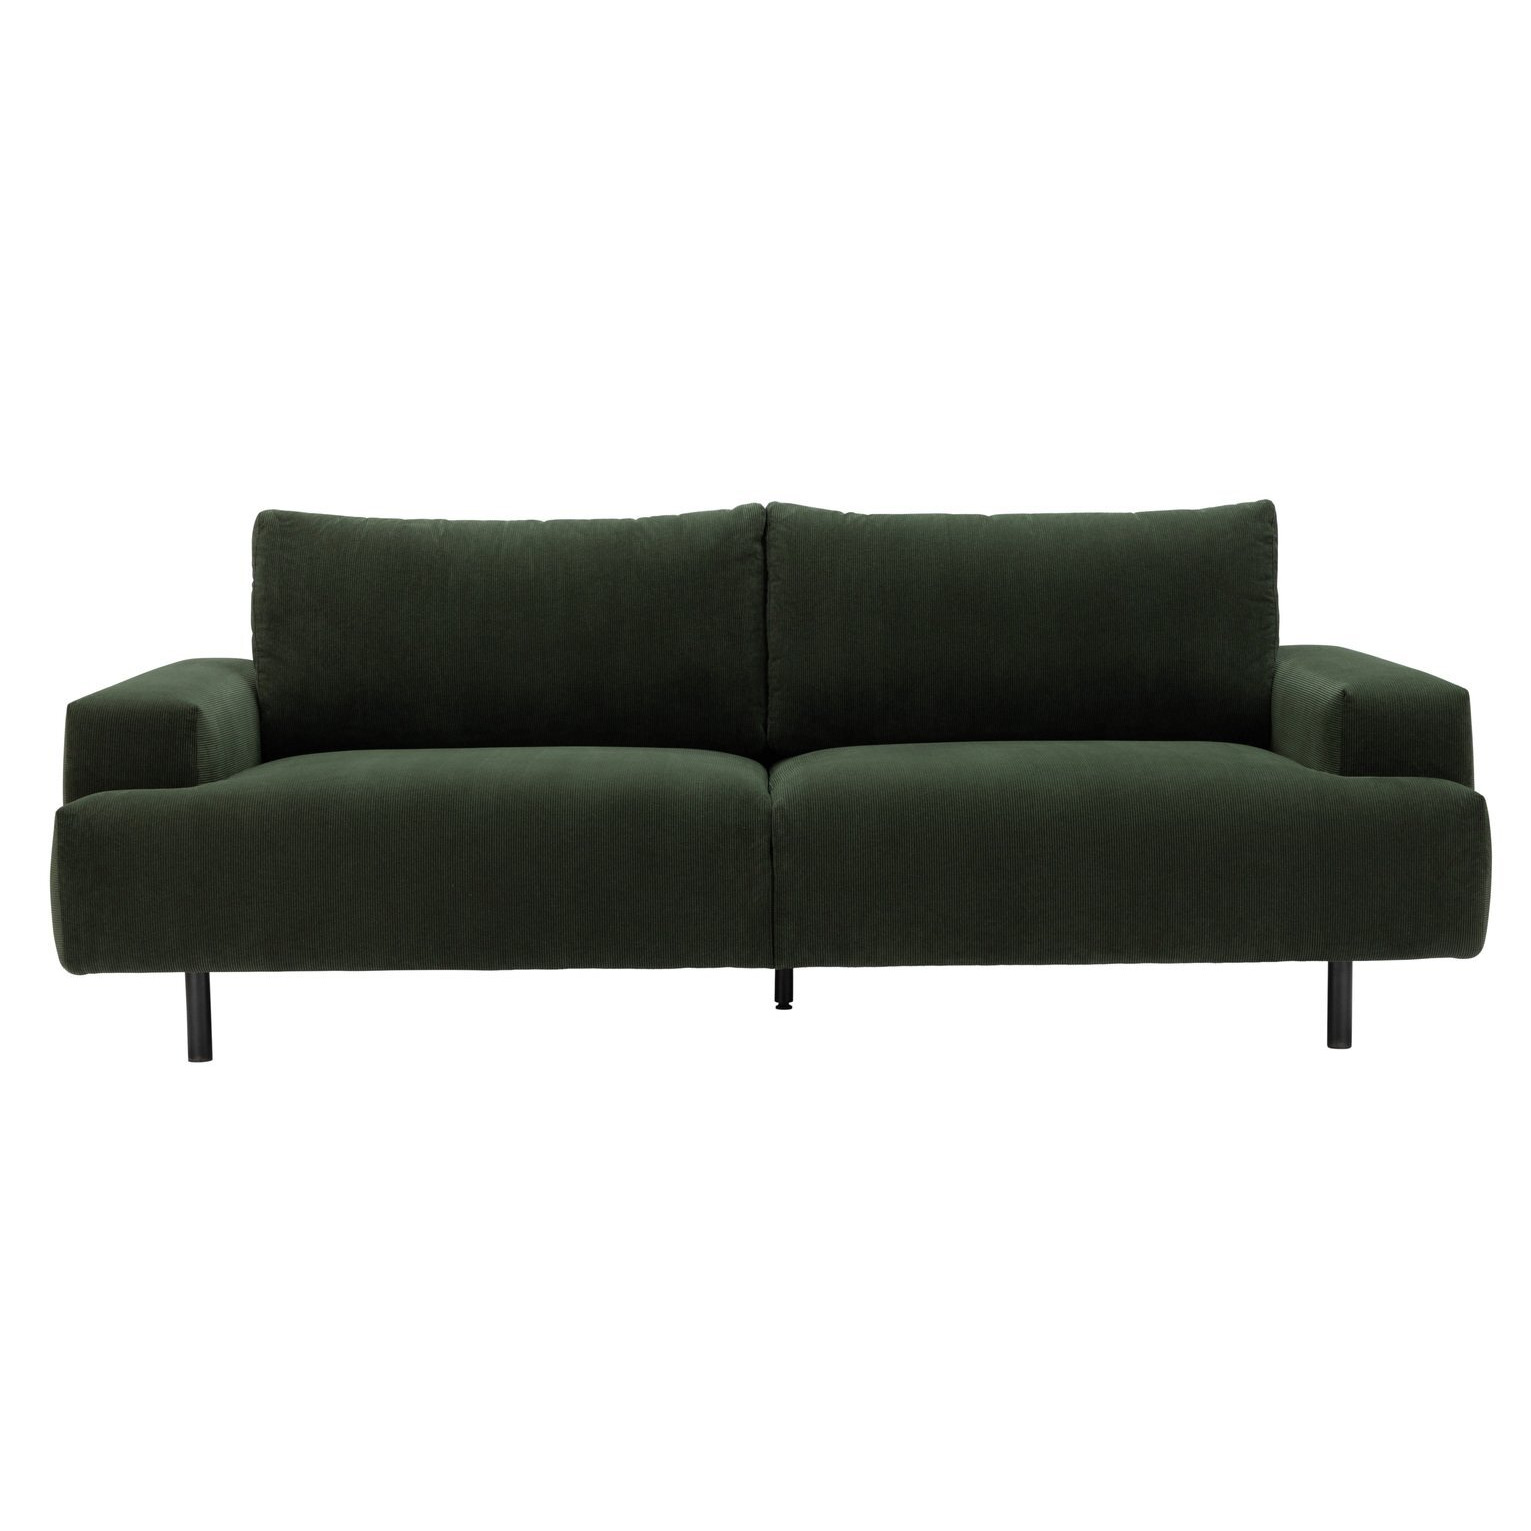 Habitat Julien Fabric 3 Seater Sofa - Dark Green - image 1